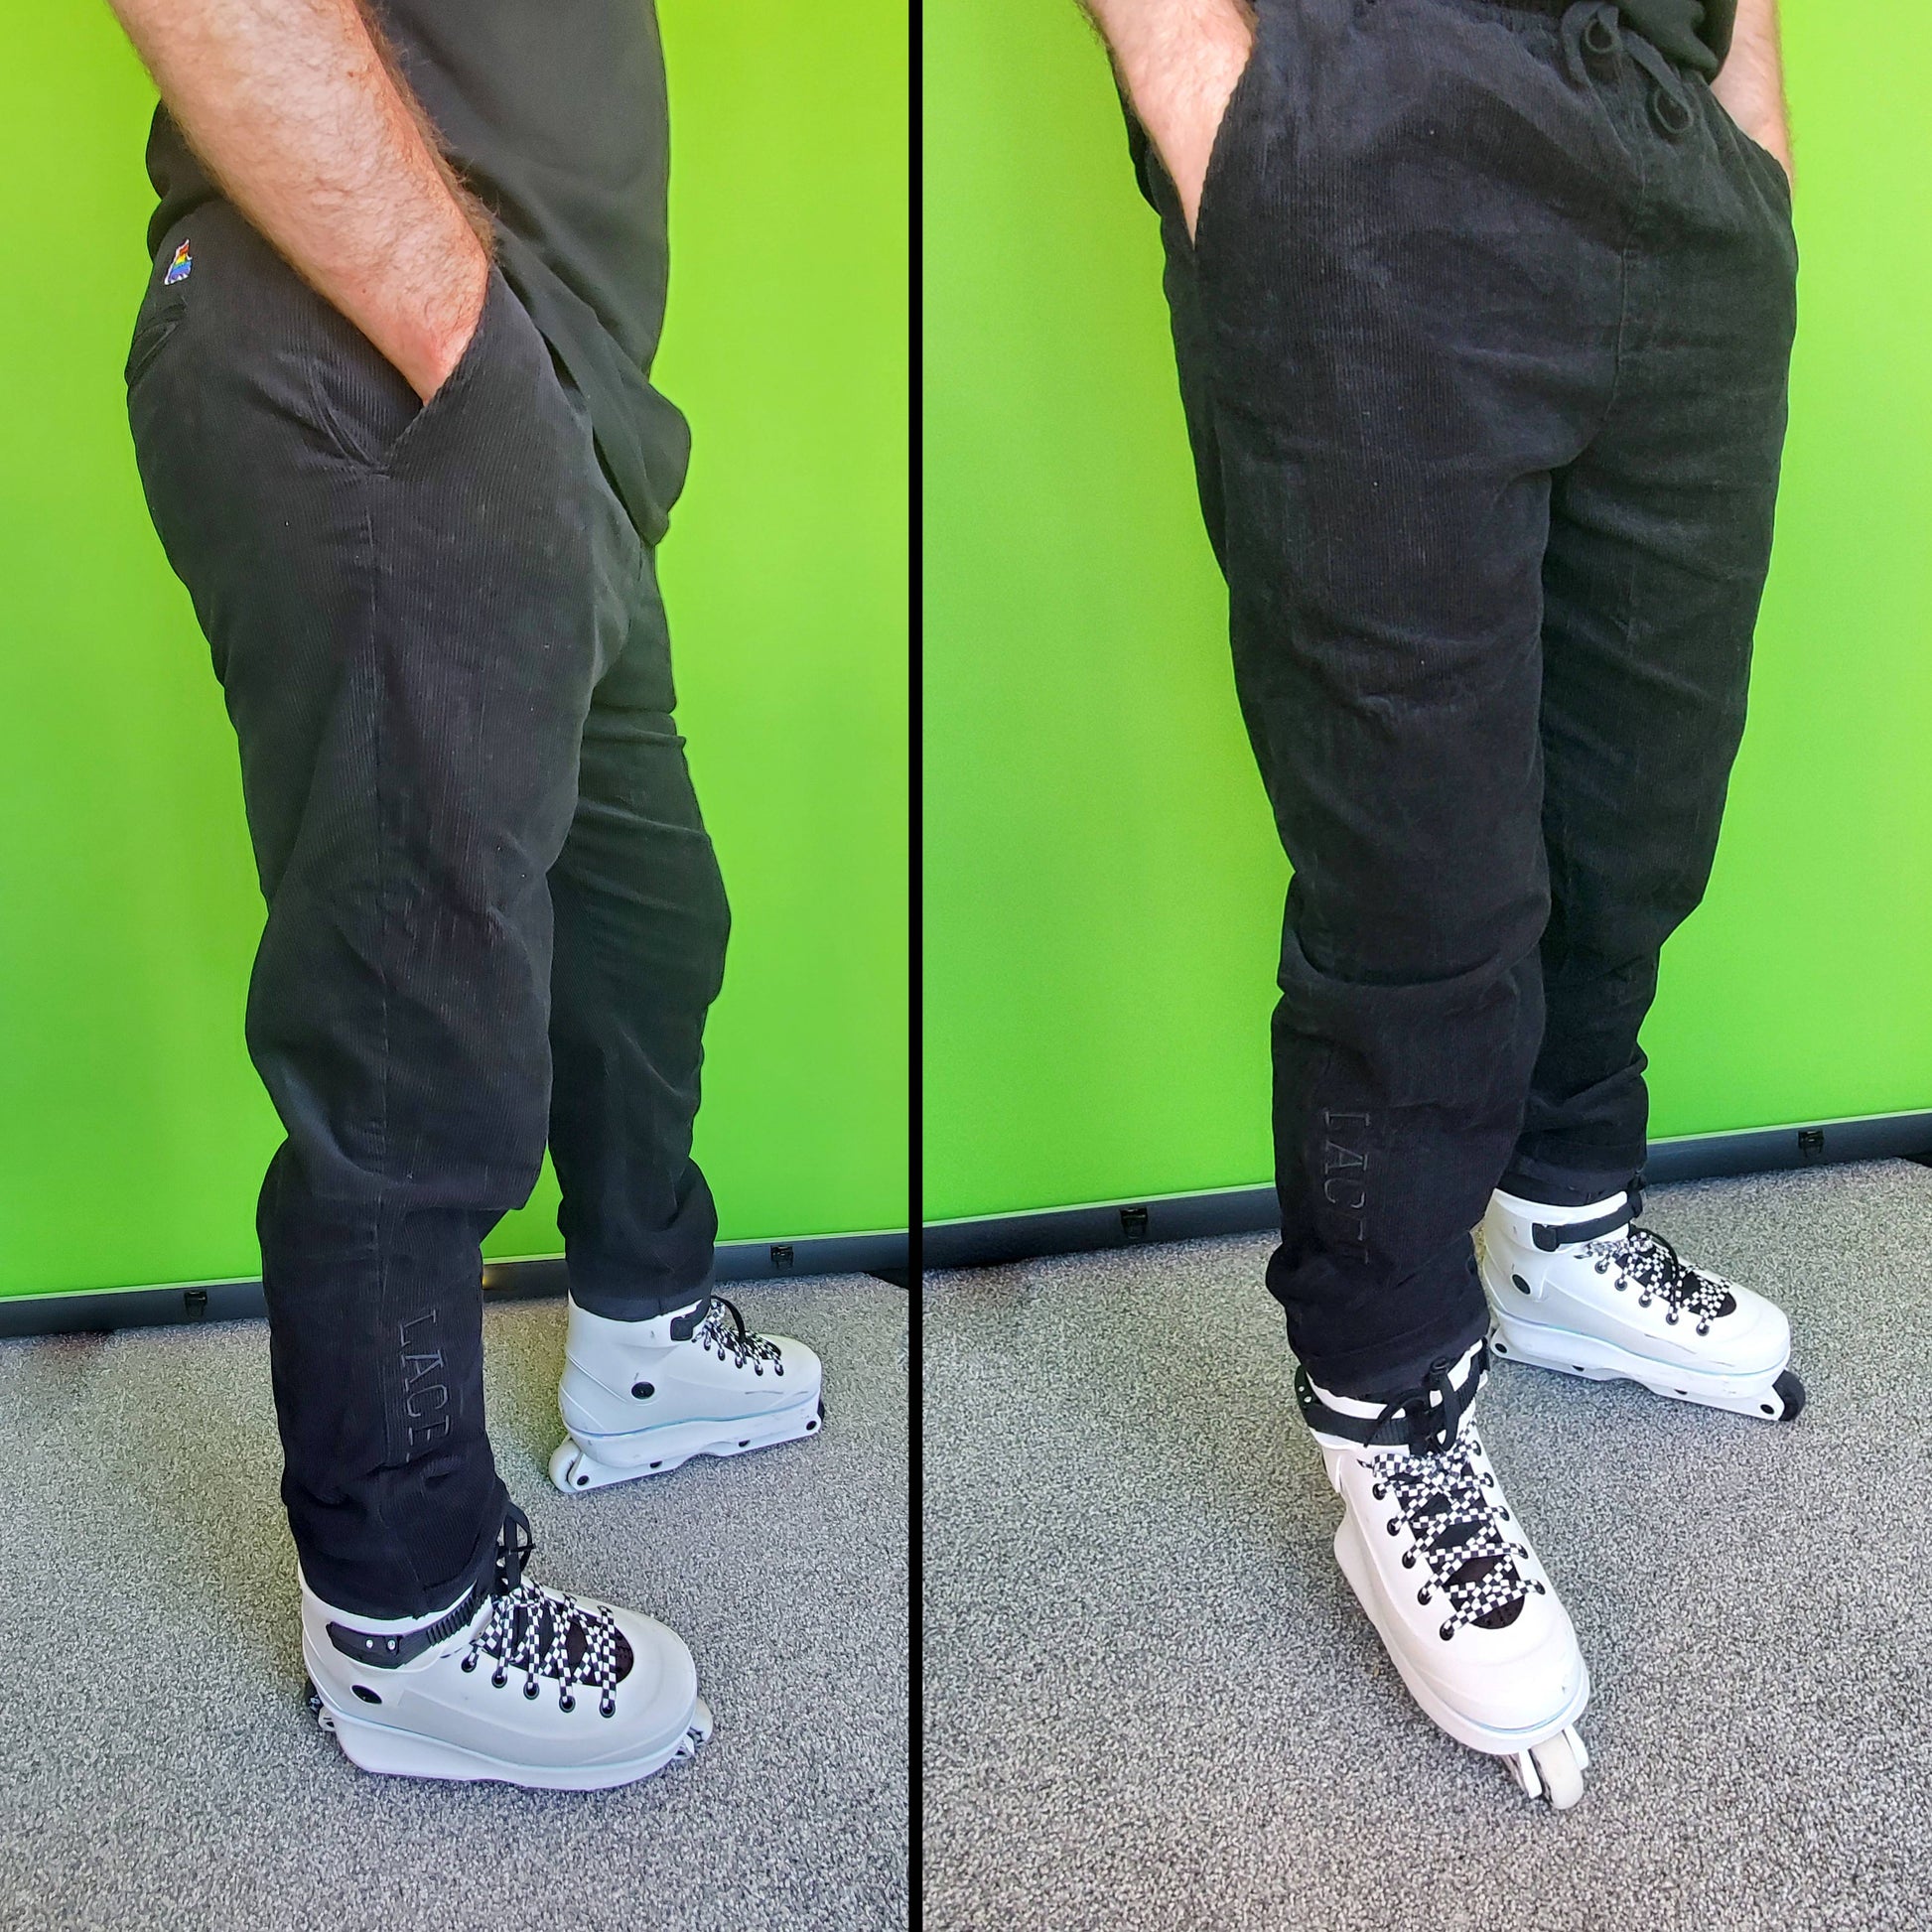 Laced Cord Pants while wearing inline skates. Standard Omni skates.